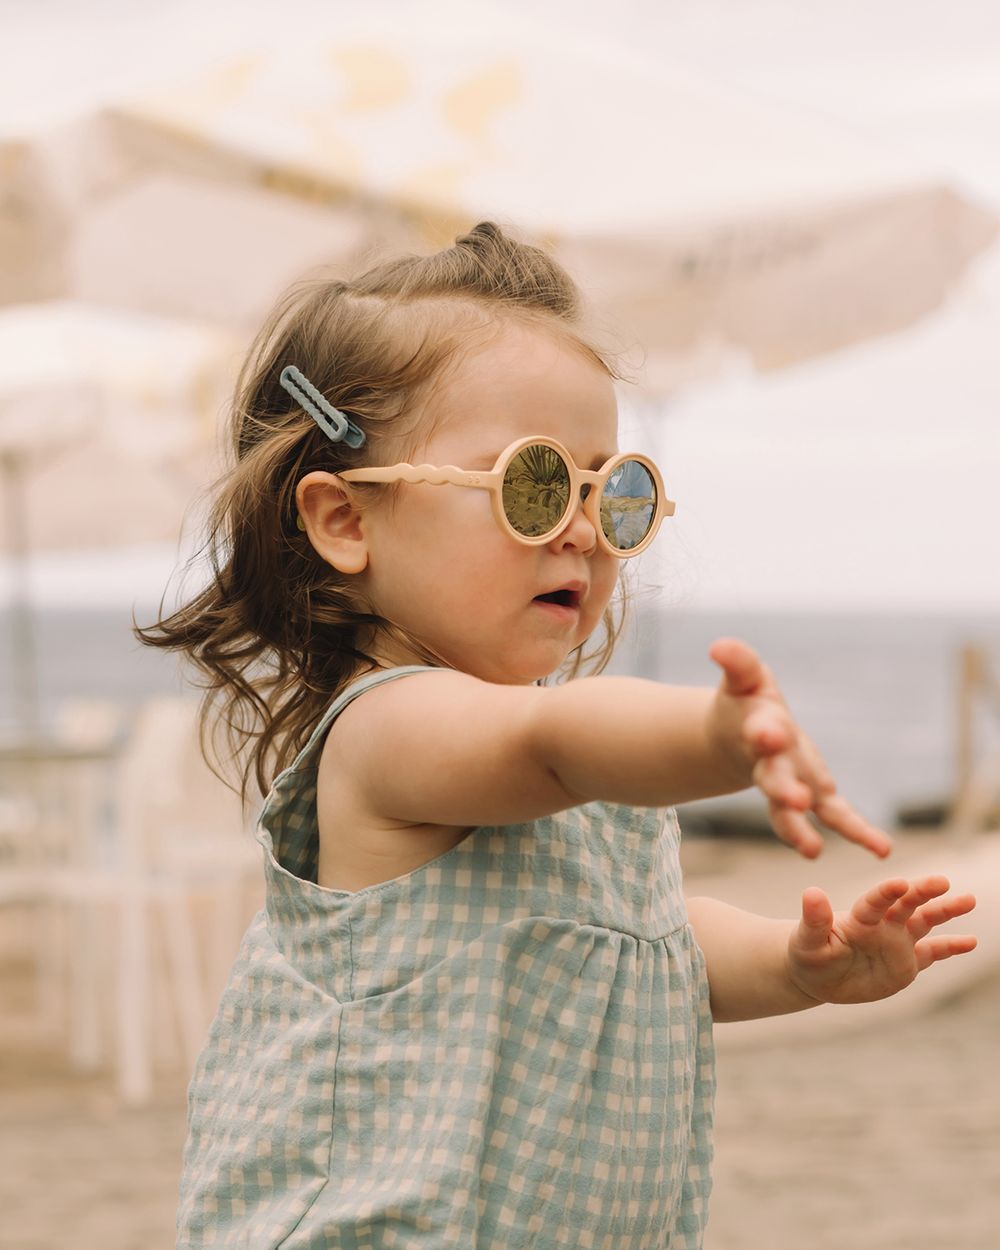 Kids, Junior, Adult Sunglasses Sand Beige with Polarized Lenses